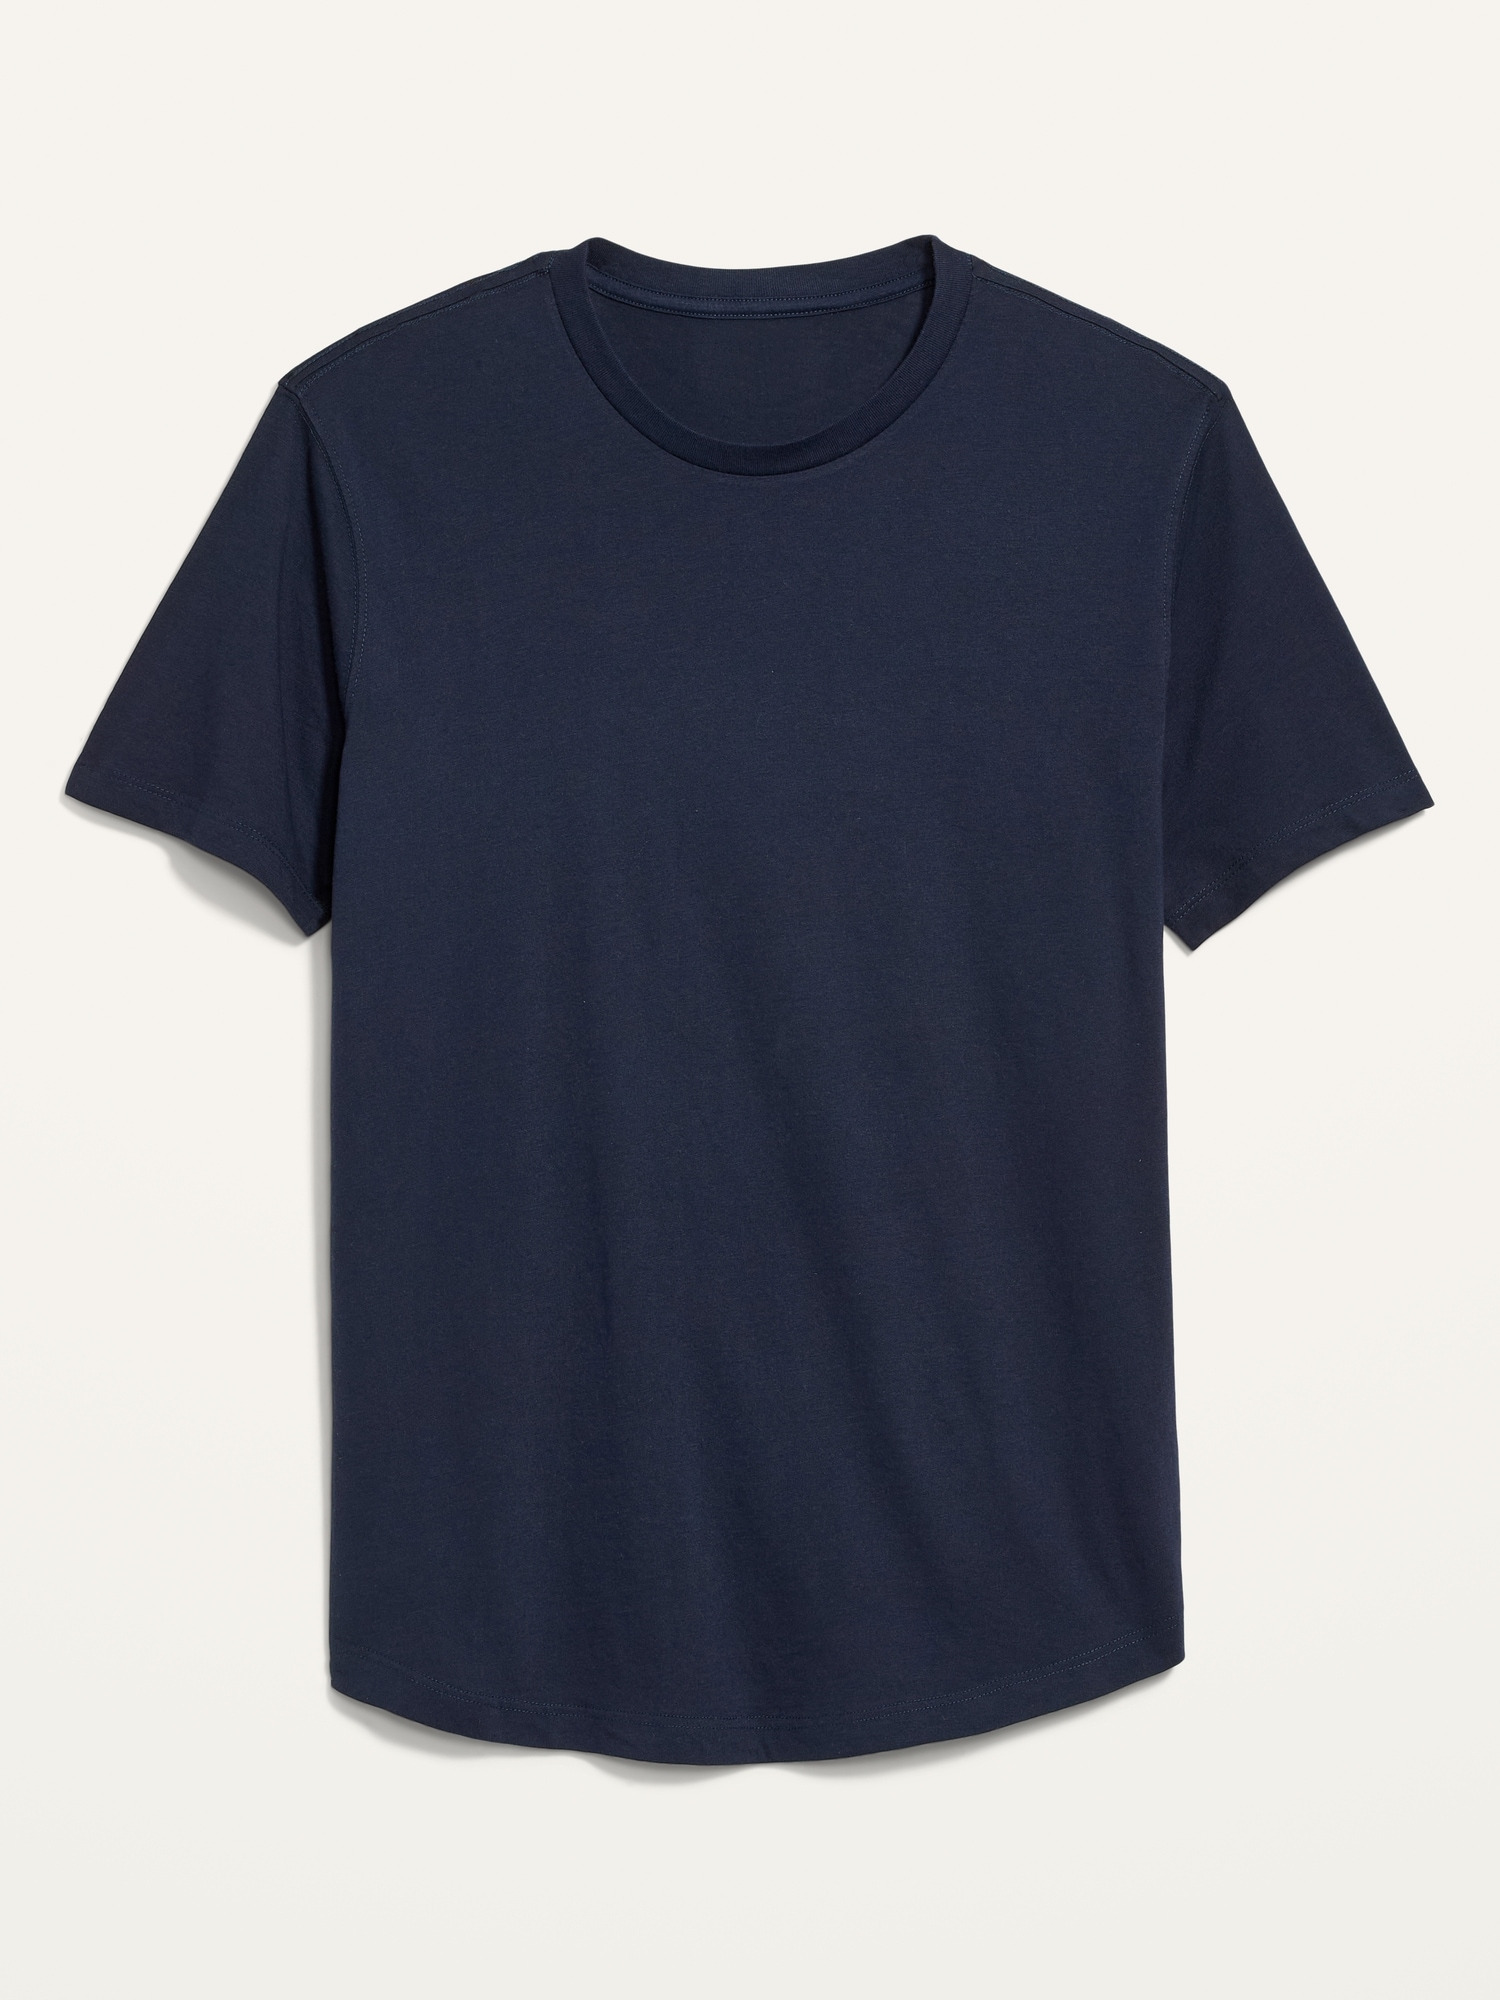 T-Shirt for Men | Old Navy